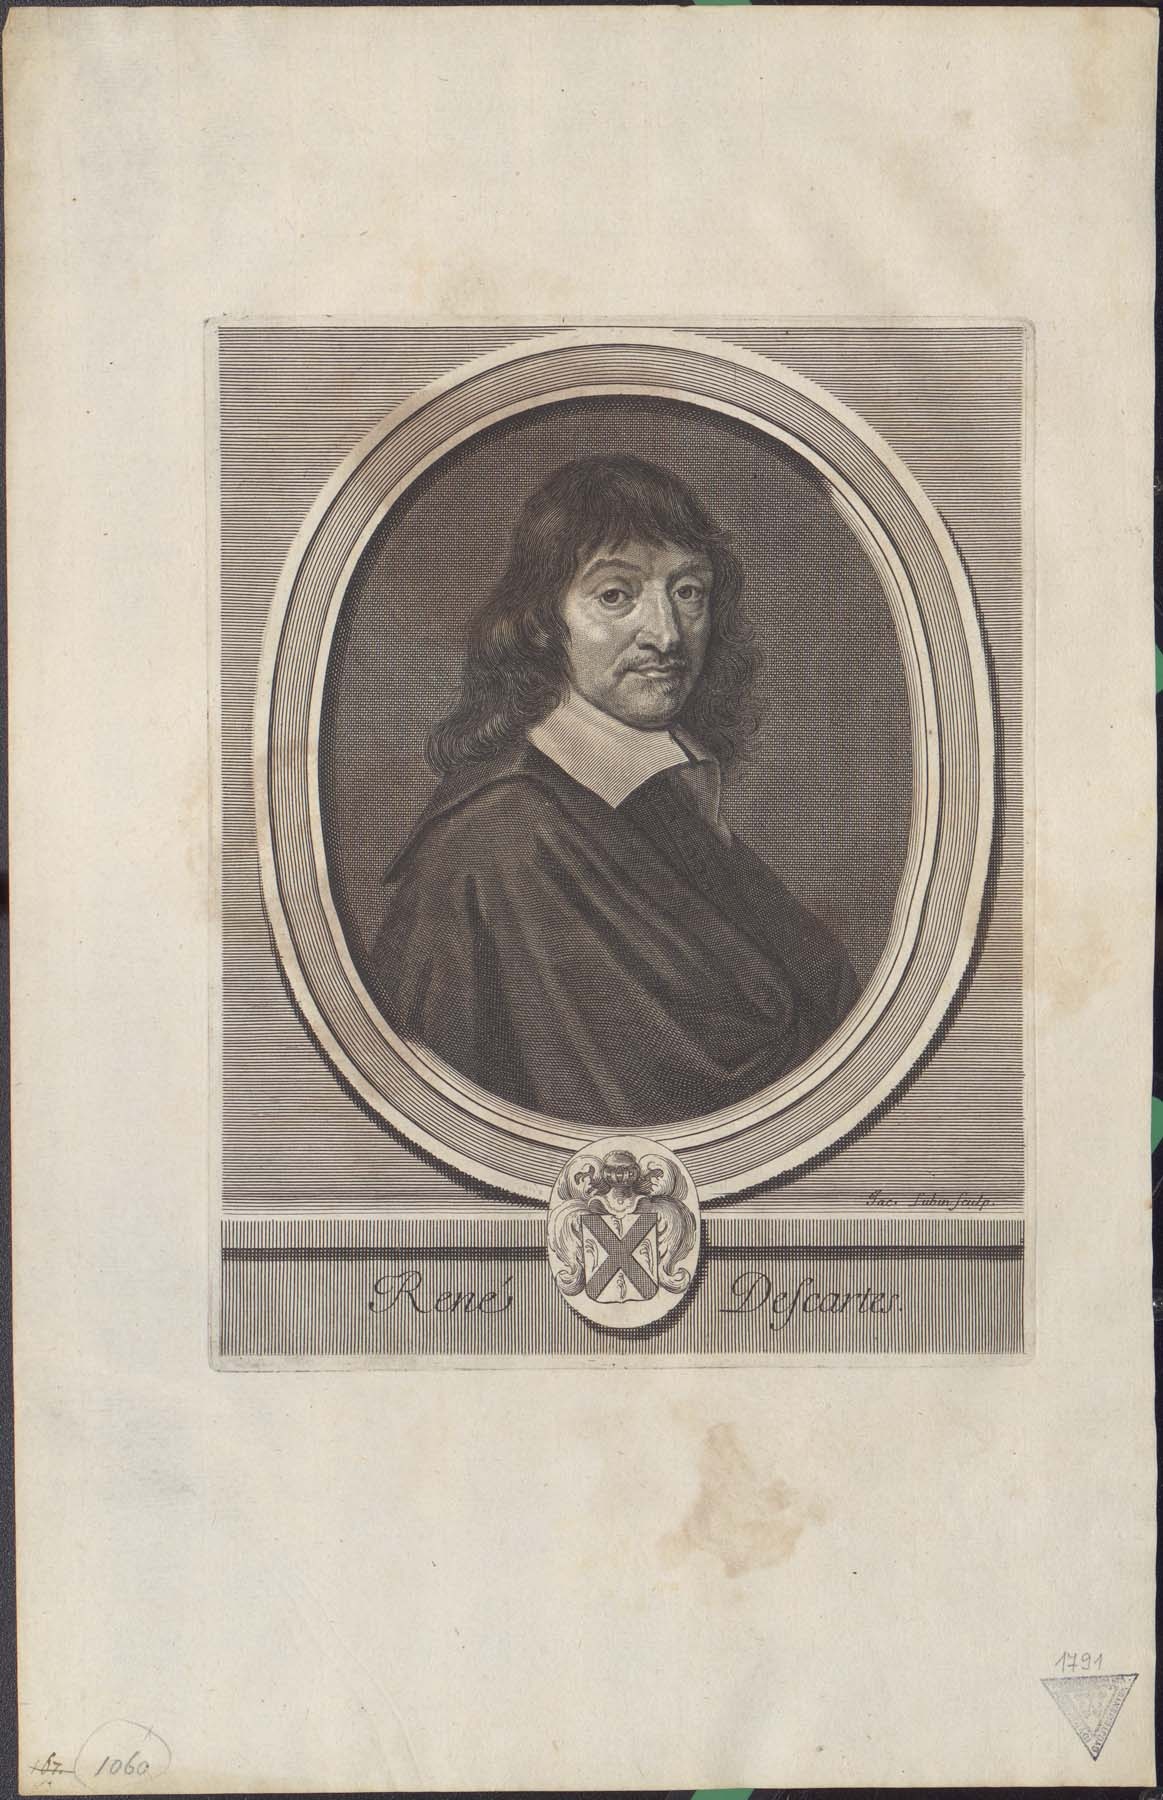 René Descartes (Pannonhalma Főapátsági Múzeum CC BY-NC-SA)